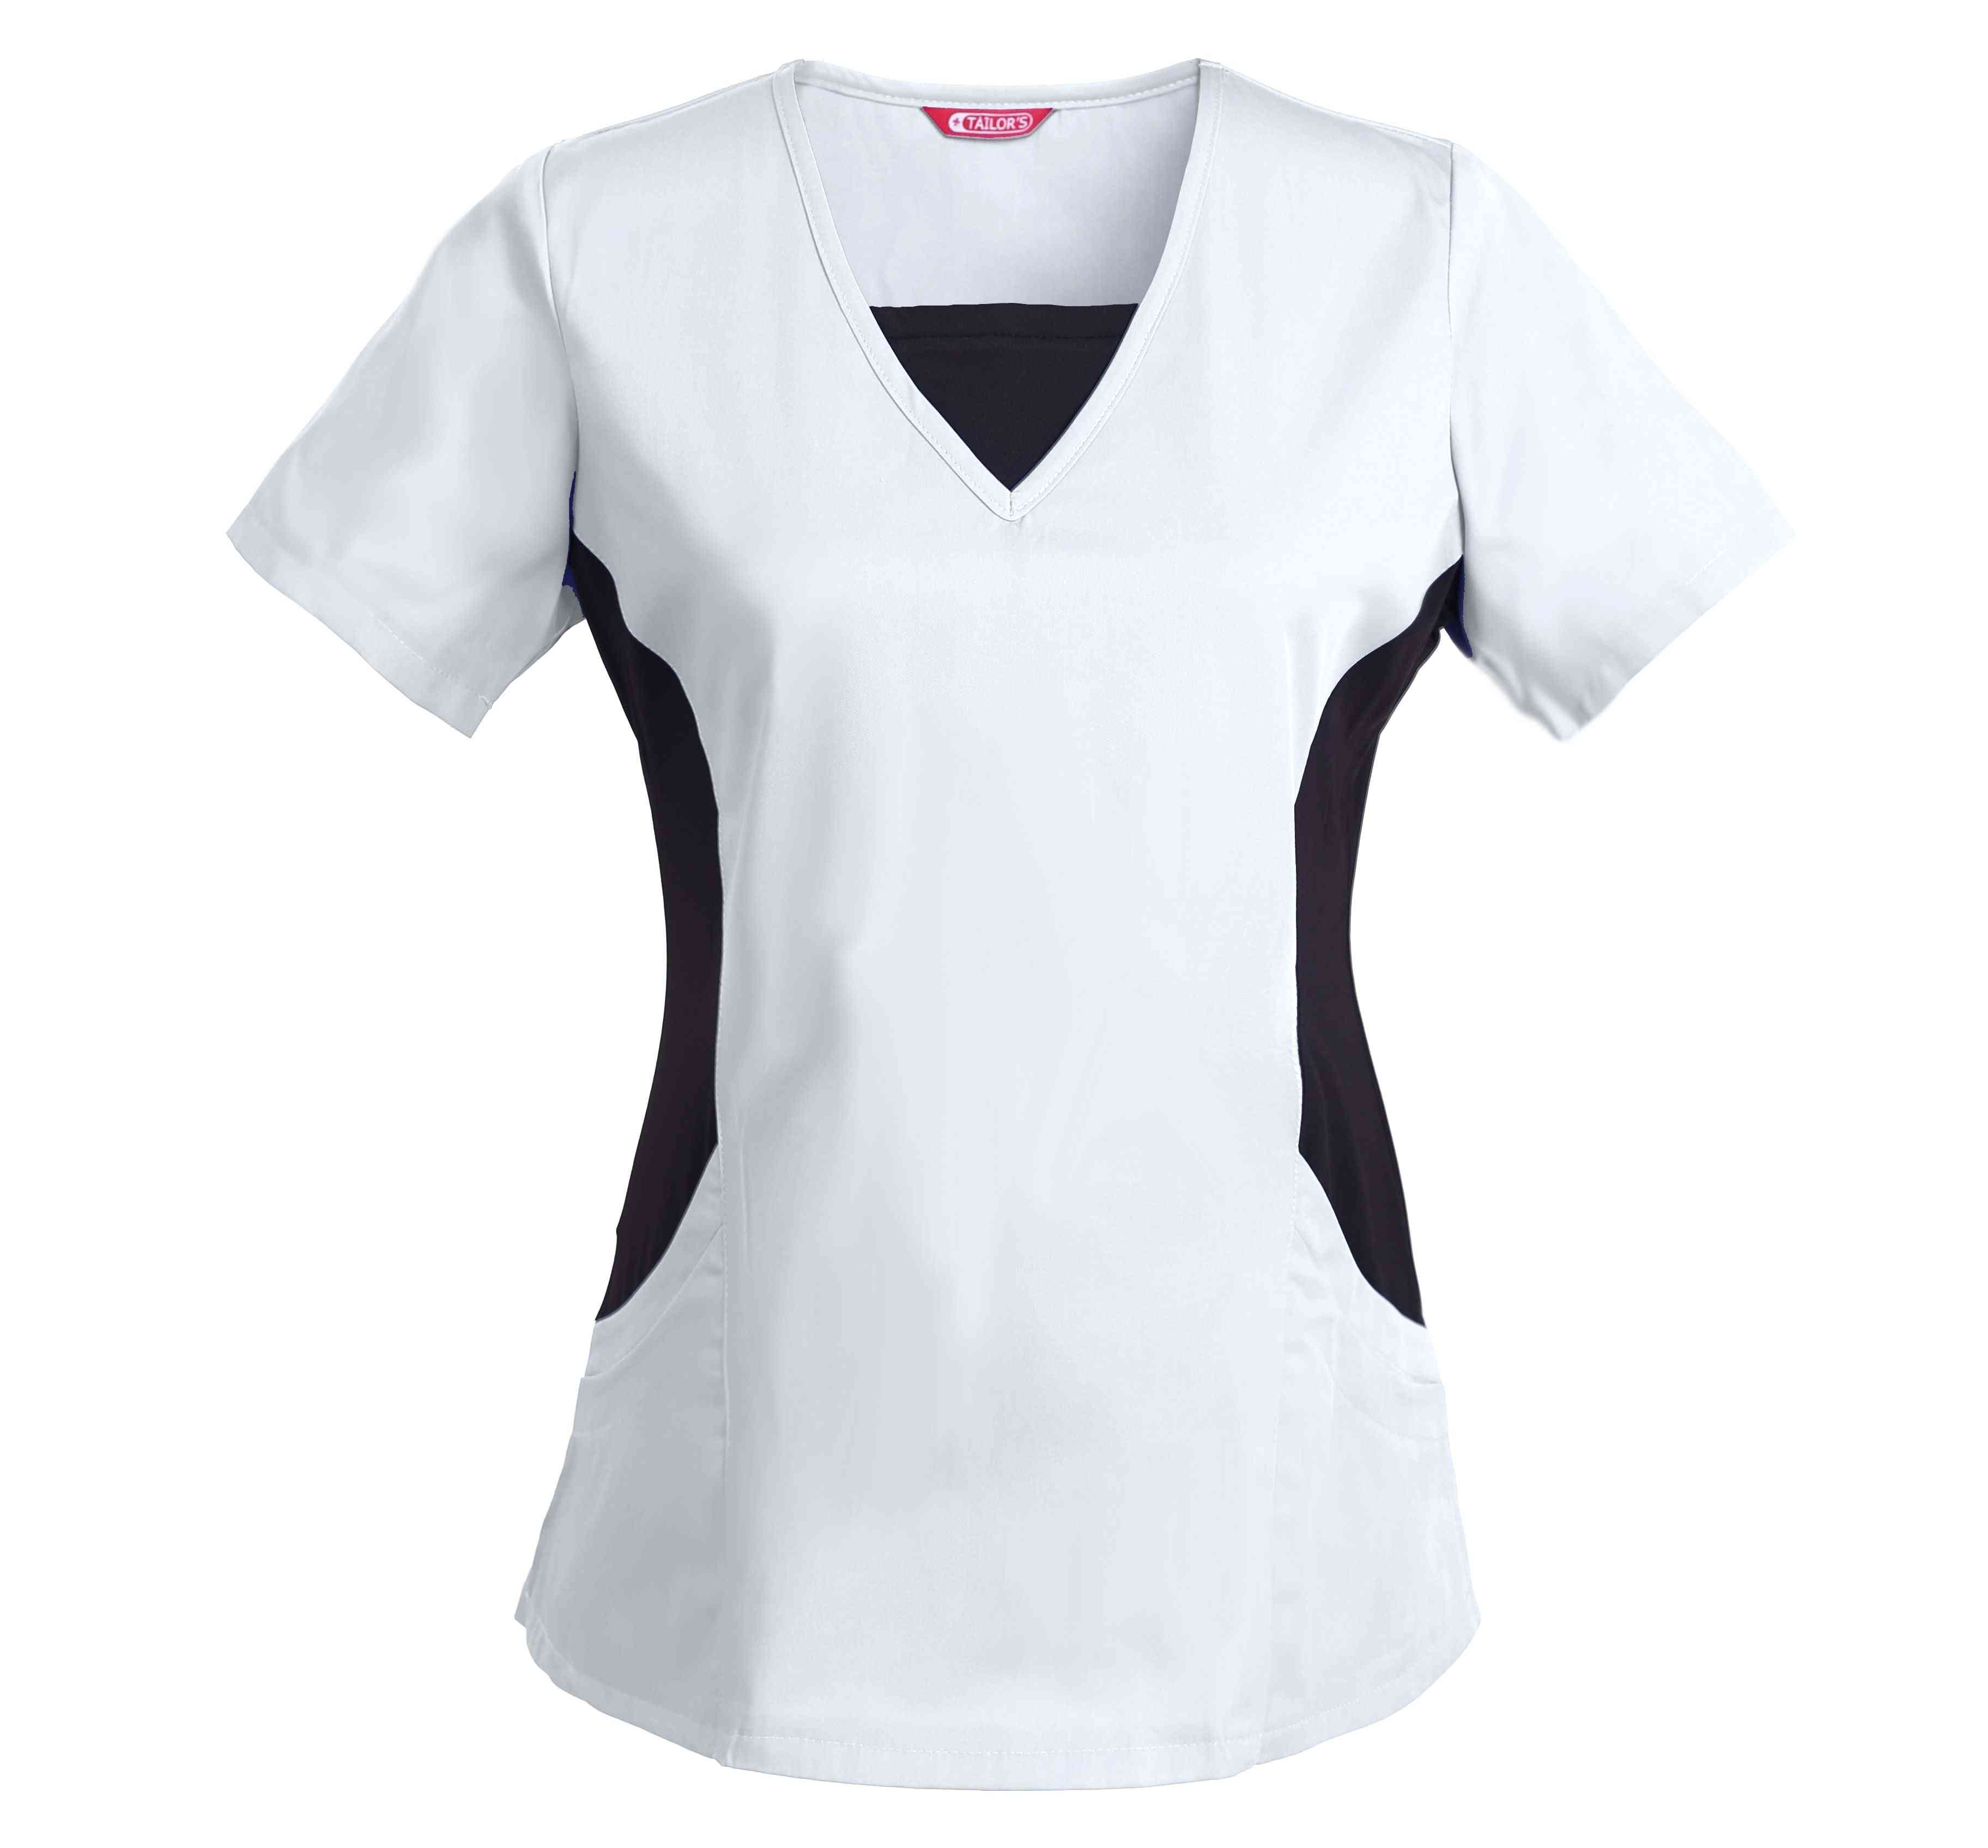 Women's Nursing Uniform Blouse Short Sleeve V-neck Working Top